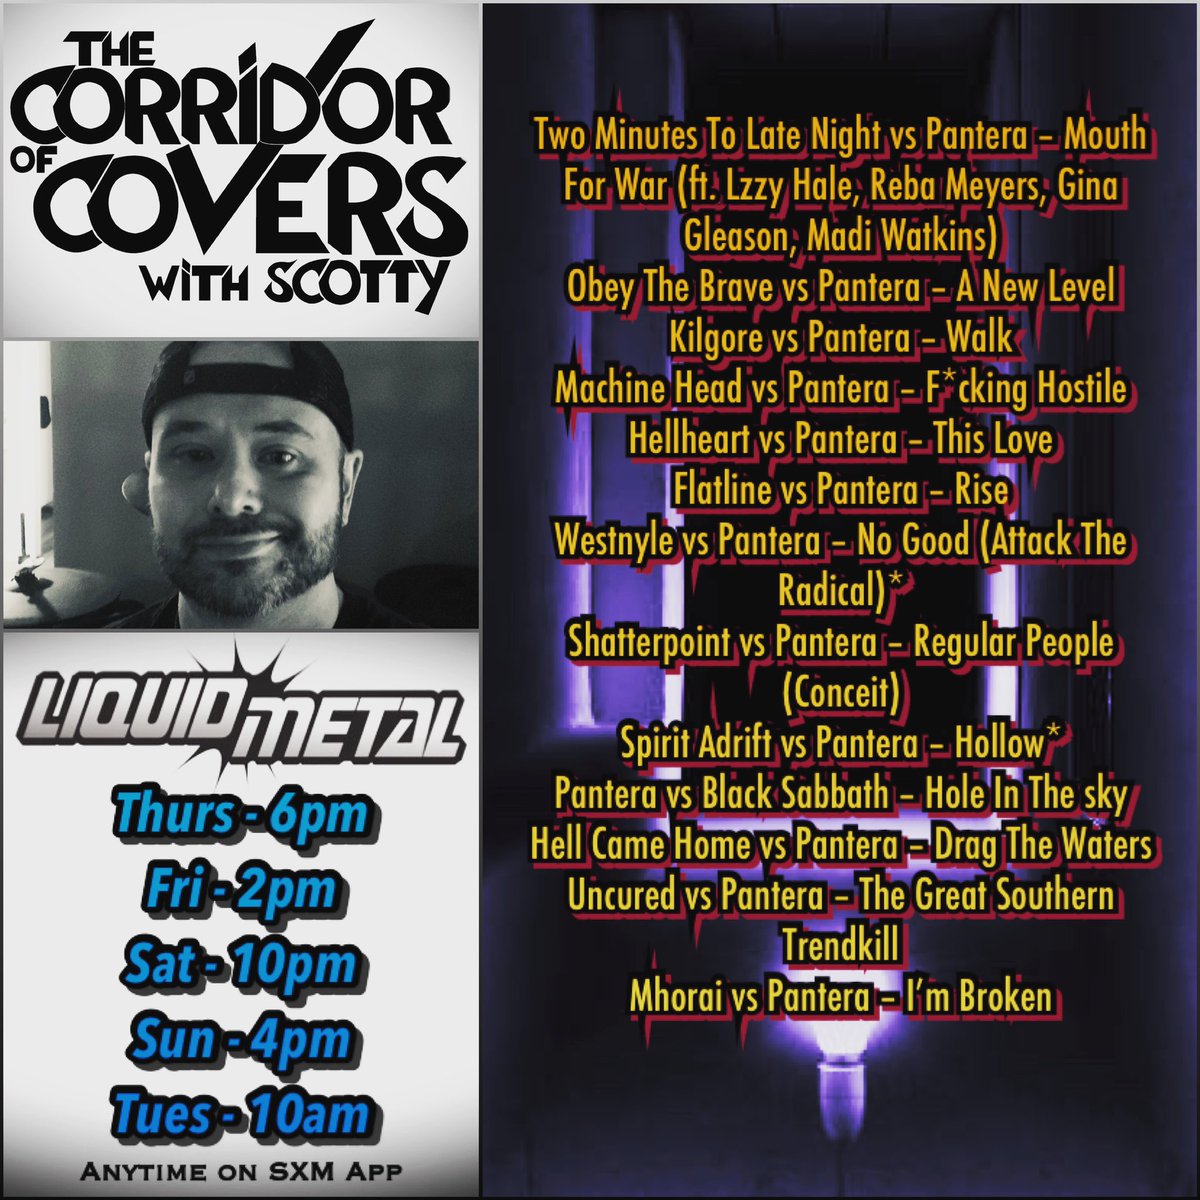 #corridorofcovers w/ #Scotty on #sxmliquidmetal .. 30 yrs of @panteraofficial #vulgardisplayofpower + 2 Premieres* from @westnyle_metal and @spiritadrift .. #getchapull 🤘🖤🤘
#metal #heavymetal #metalcovers #coversong #dimebagdarrell #vinniepaul #philanselmo #rexbrown #pantera